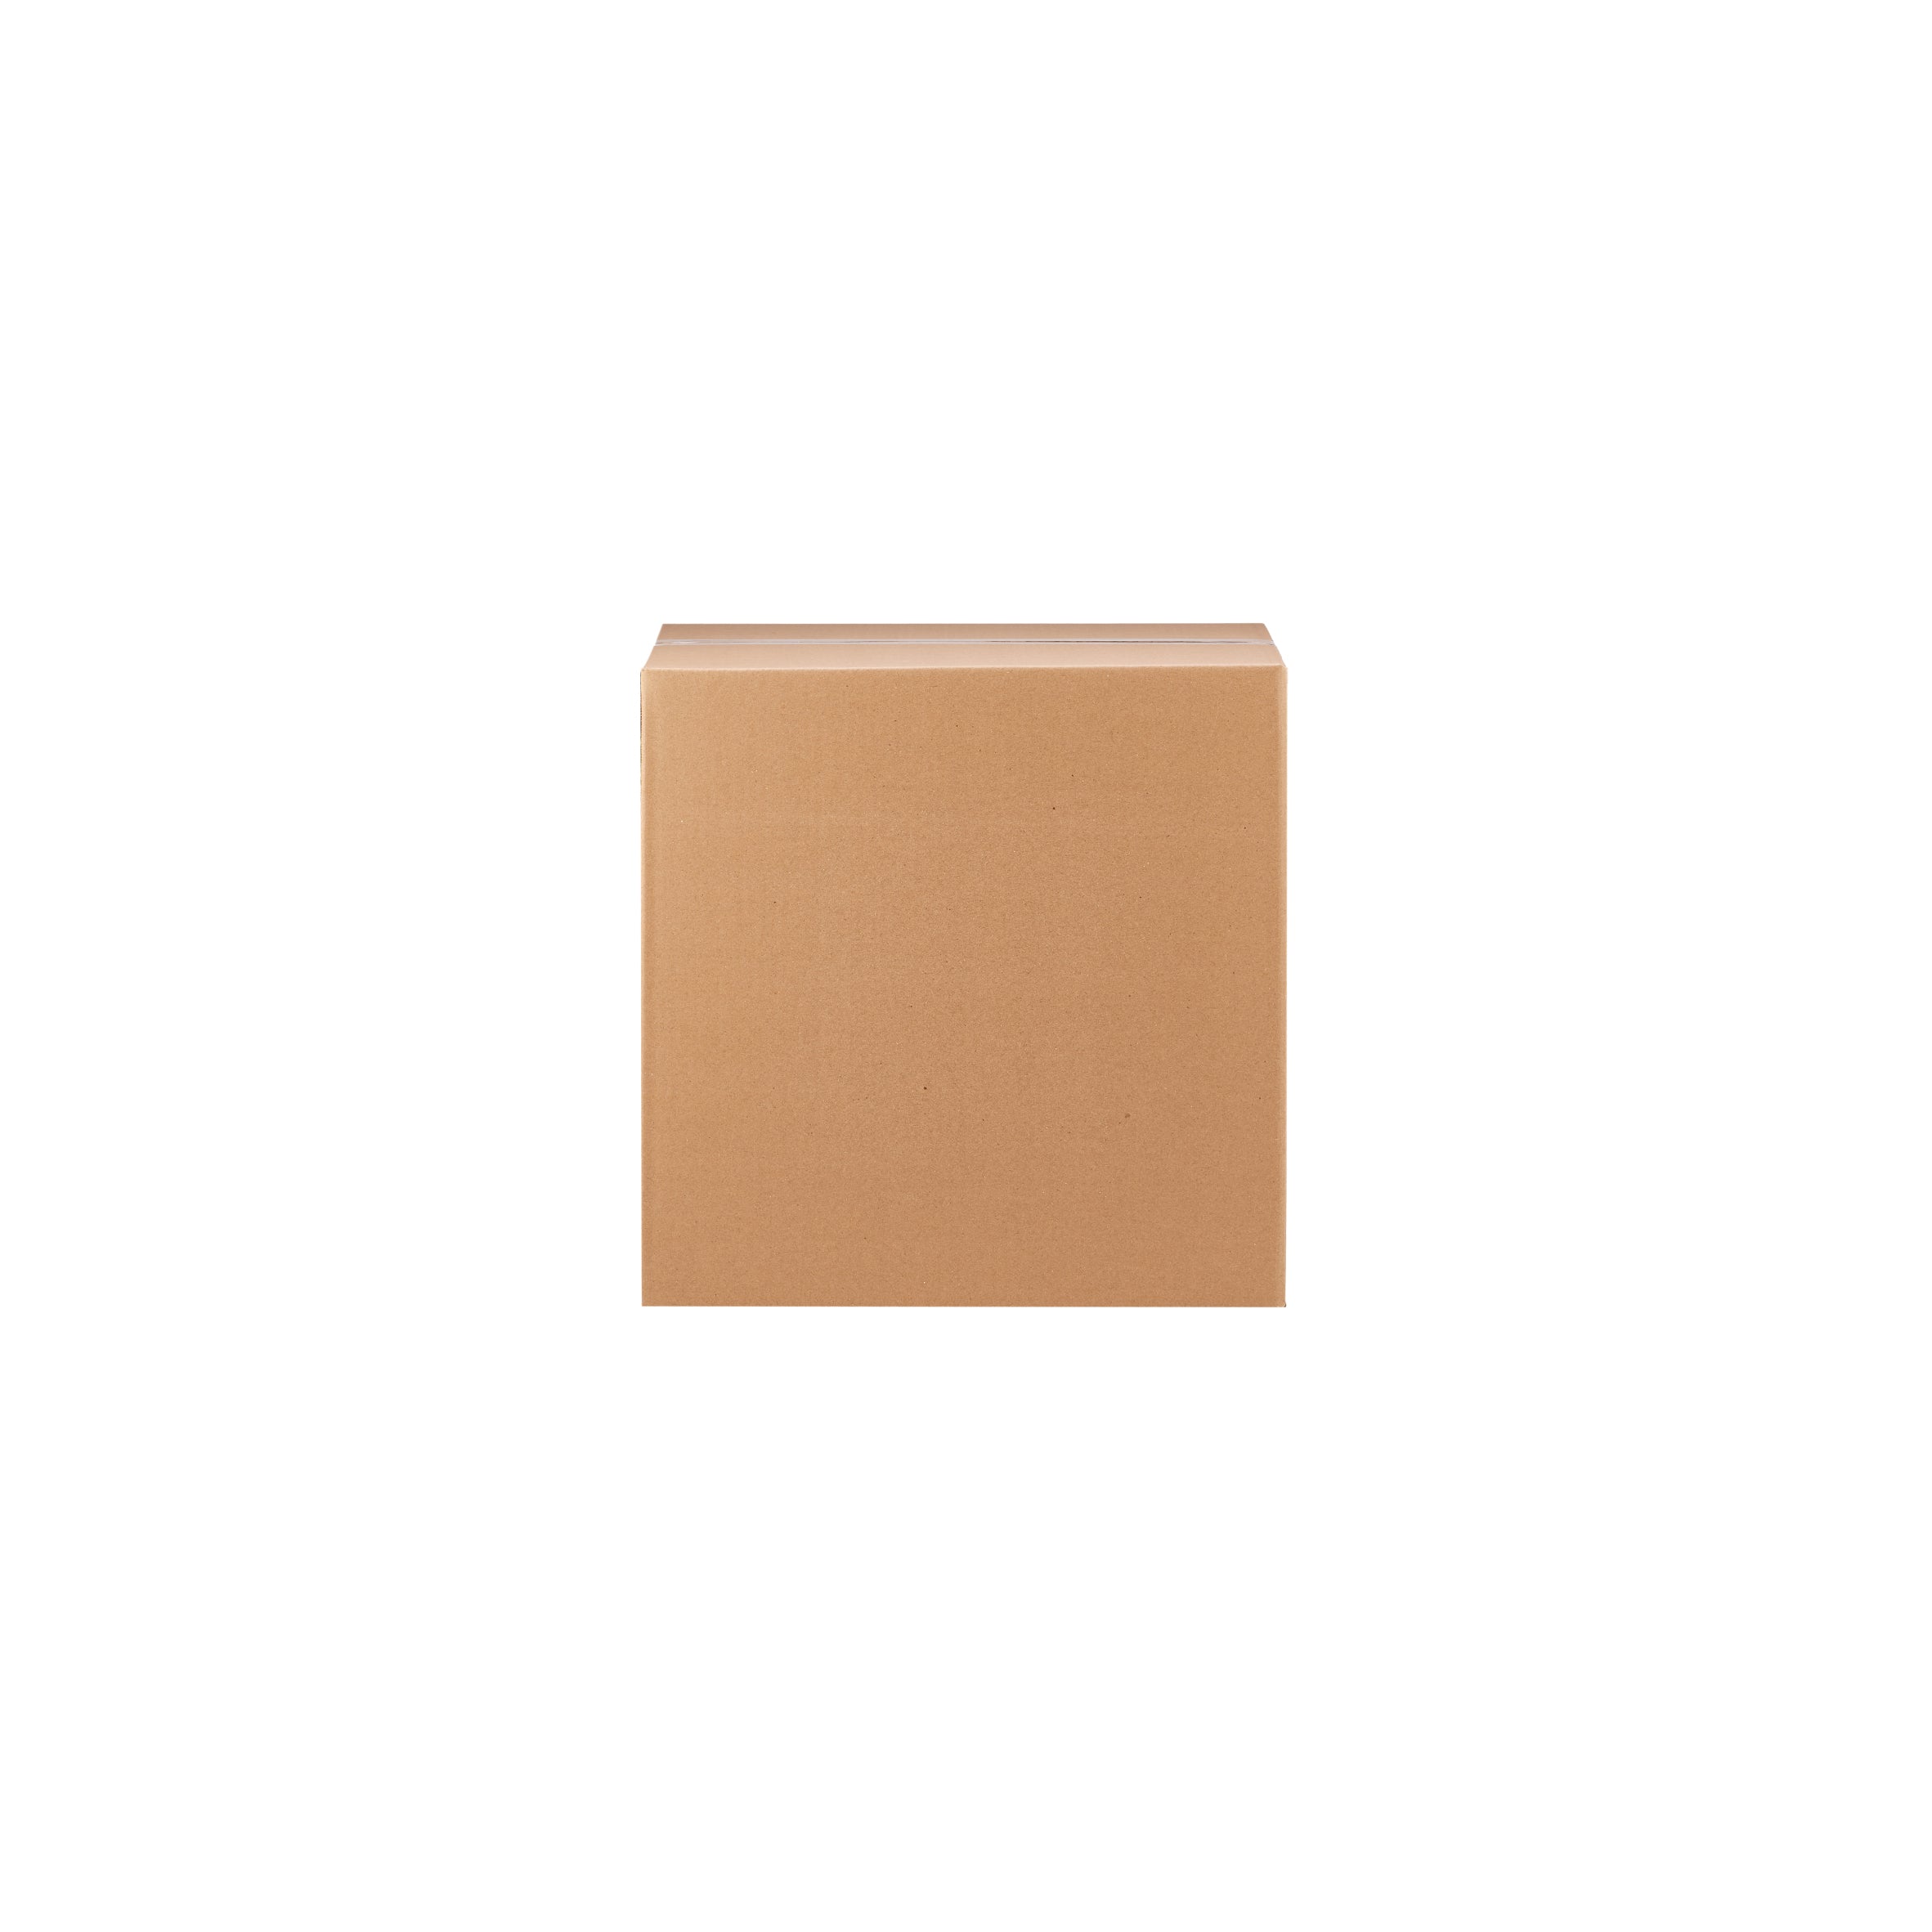 30 kg Carboard box shipping carton - hotpackwebstore.com